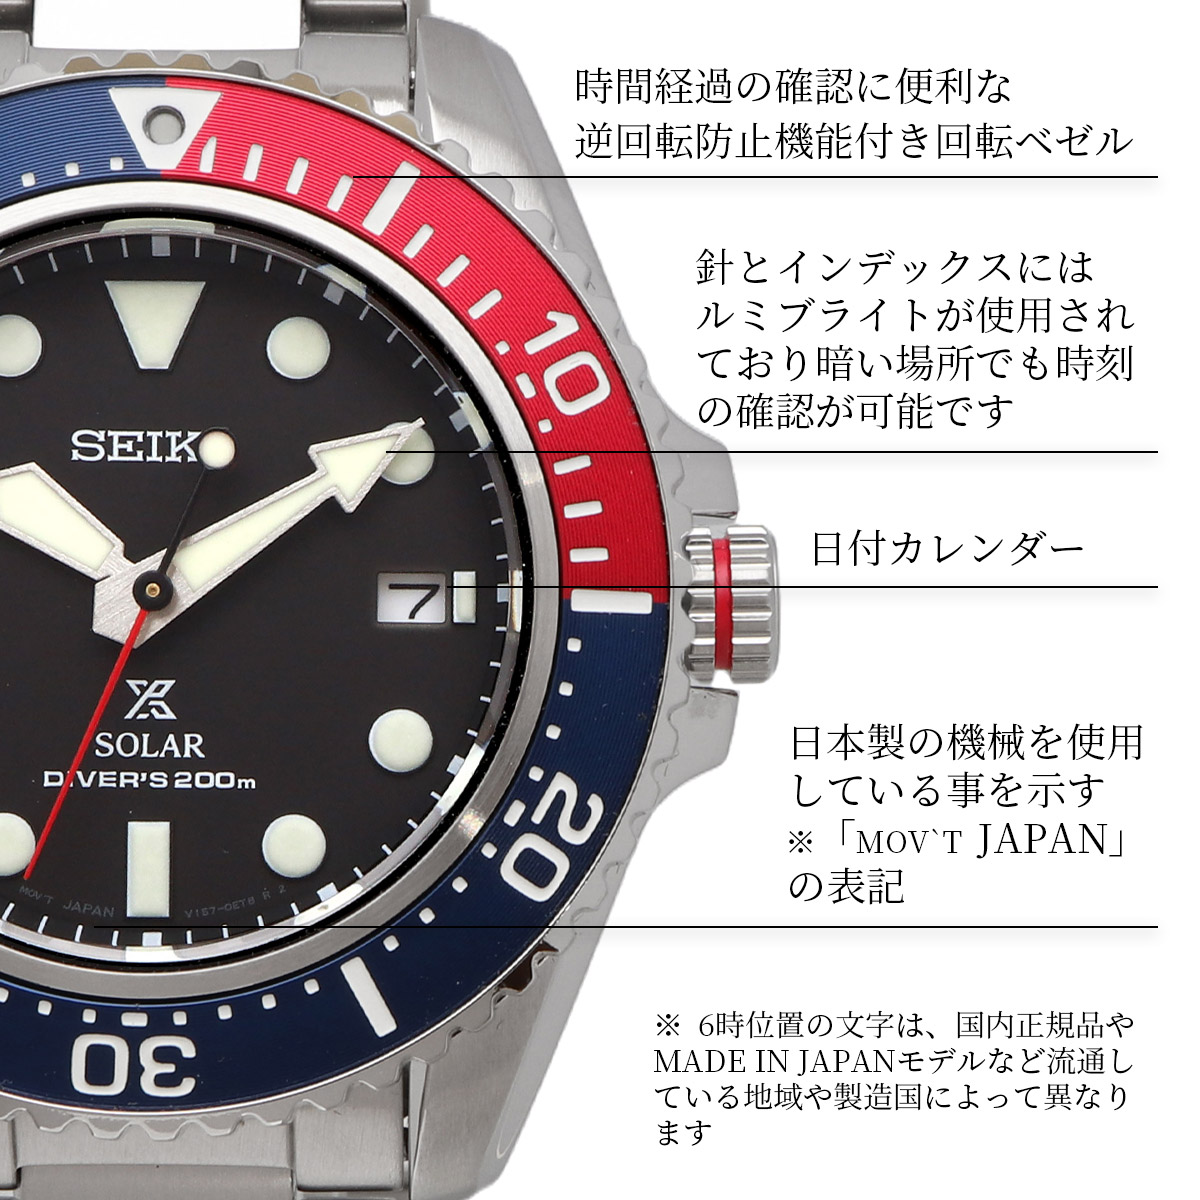 SEIKO セイコー 腕時計 メンズ 海外モデル PROSPEX プロスペックス